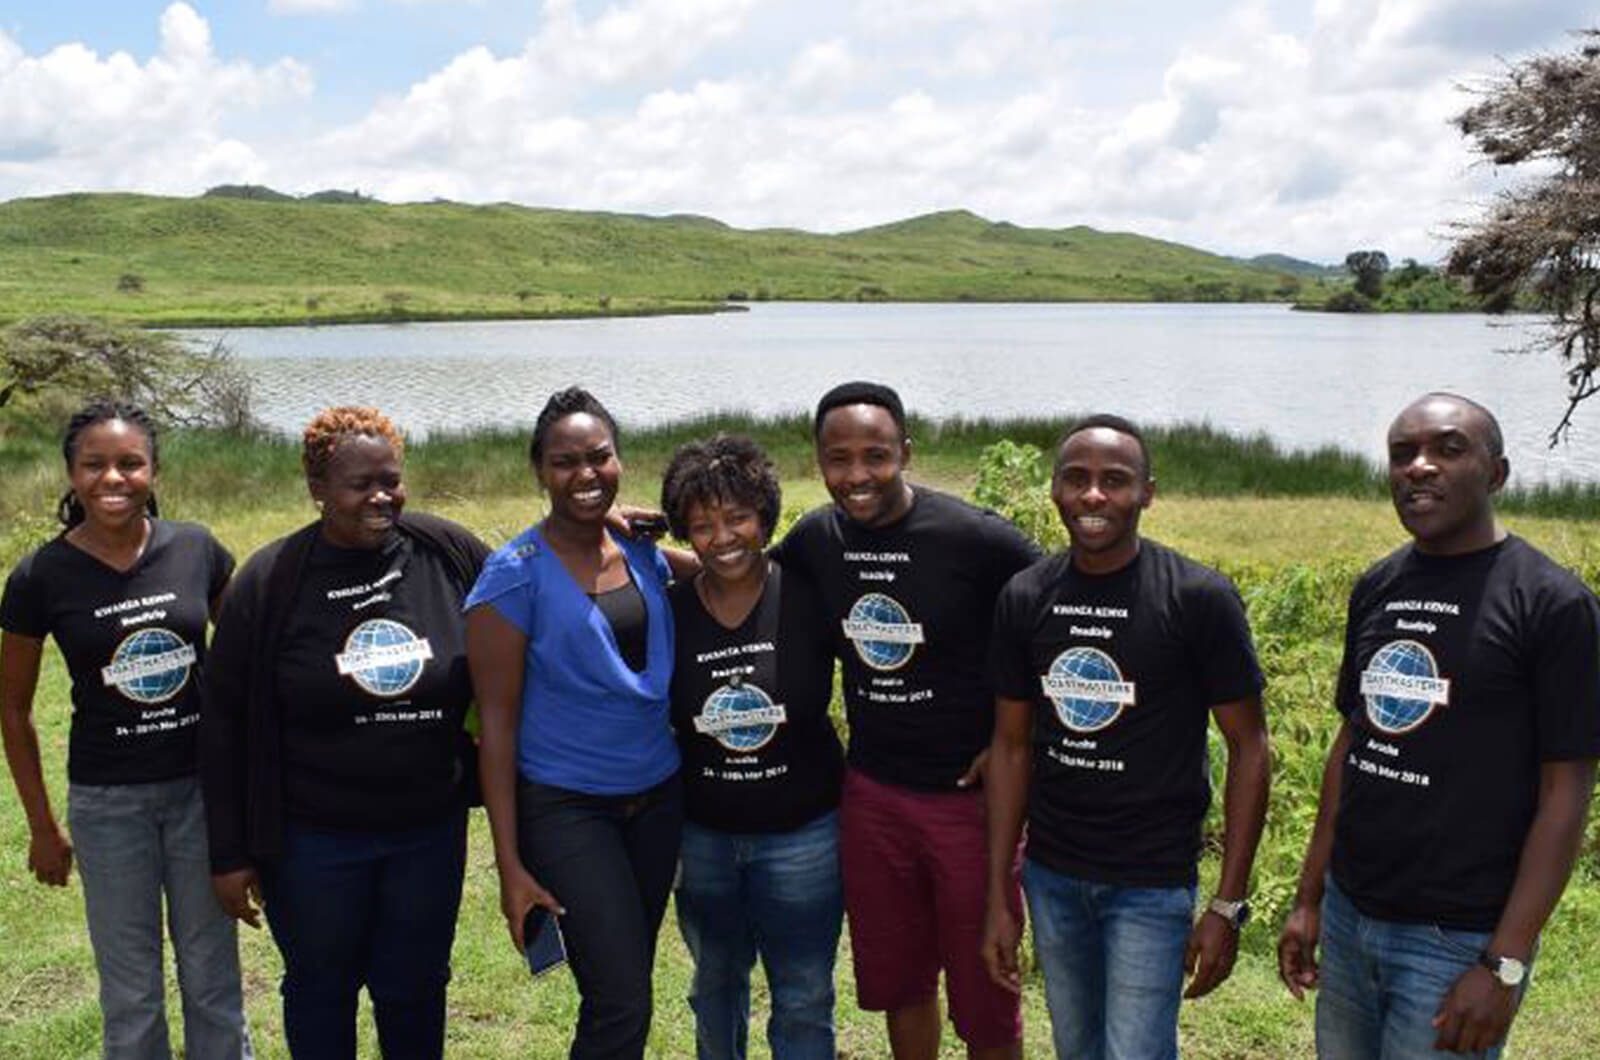 Kwanza Kenya Toastmasters club in Nairobi, Kenya, organized a road trip to visit Arusha Toastmasters club in Arusha, Tanzania. In addition, members of Kenya’s Kisumu, Narobi and Early Bird clubs joined for a collaborative experience.